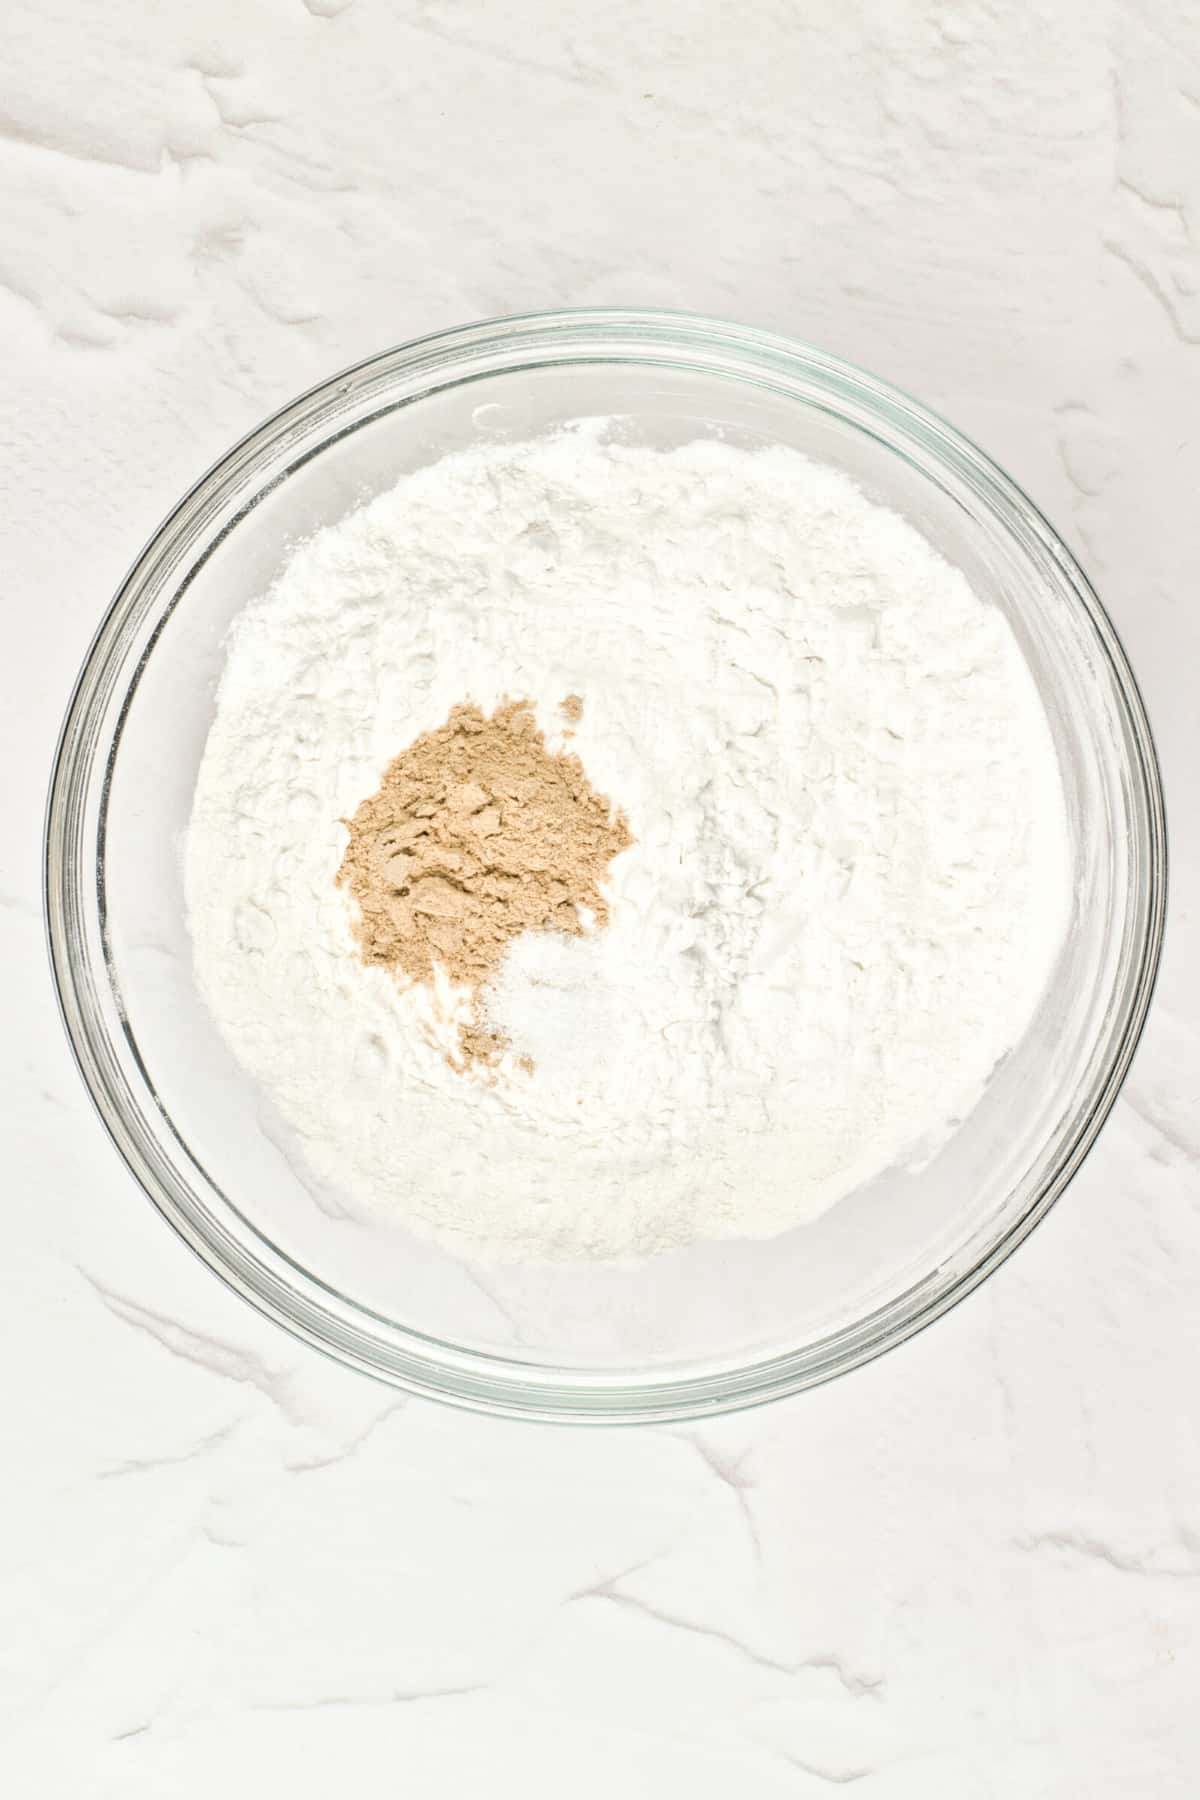 A glass bowl with flour and psyllium husk powder.